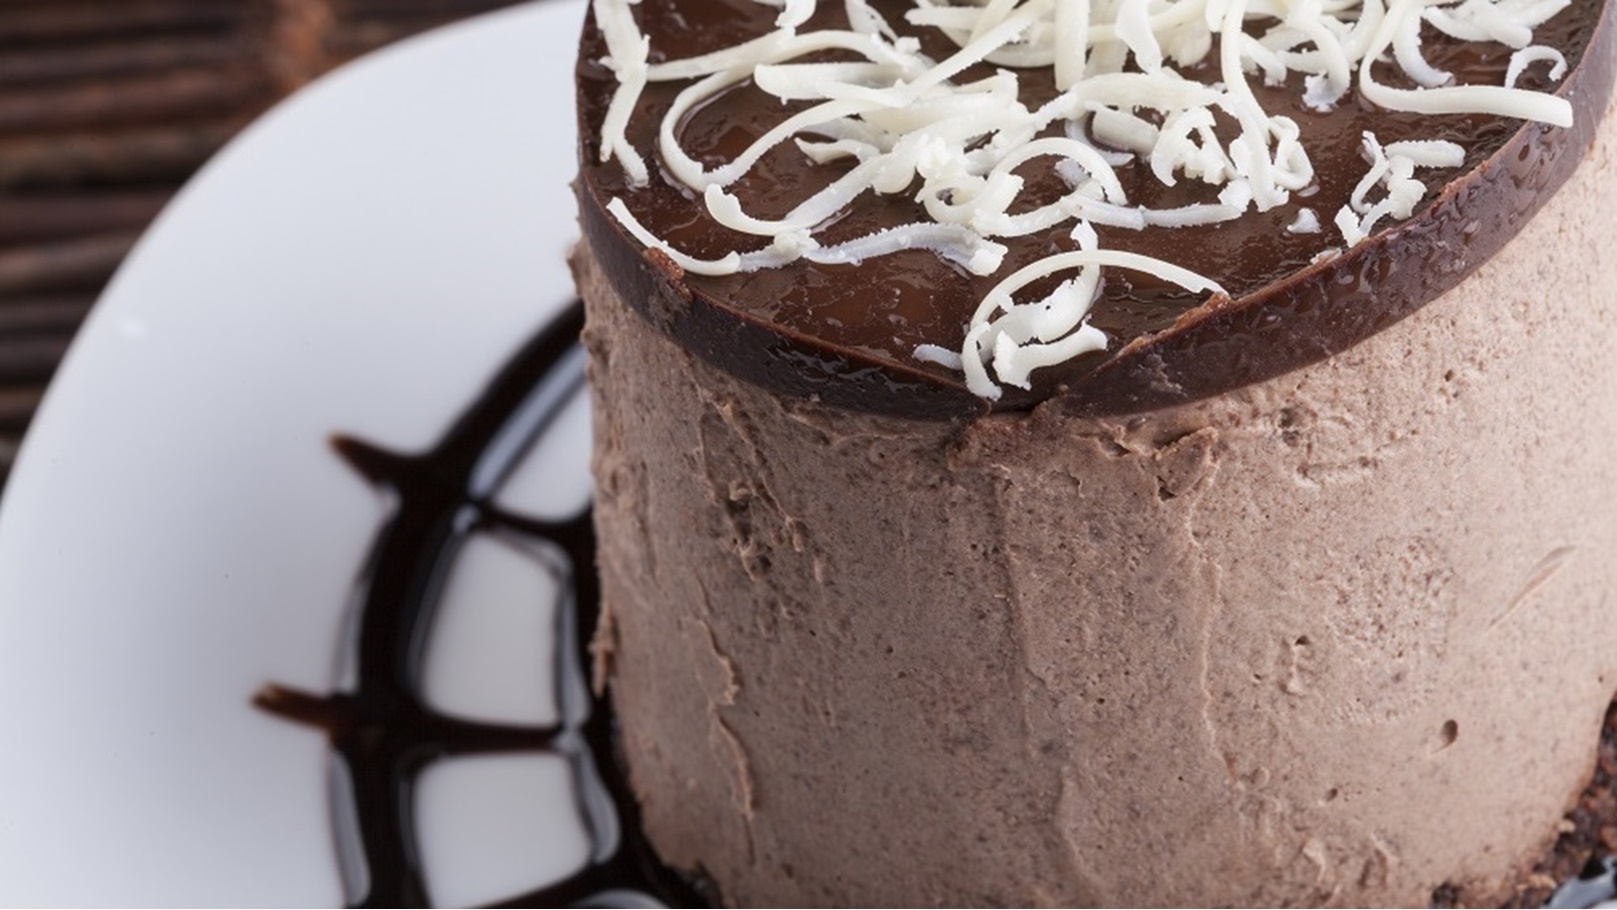 chocolate-mousse-cake-2021-08-26-18-11-47-utc